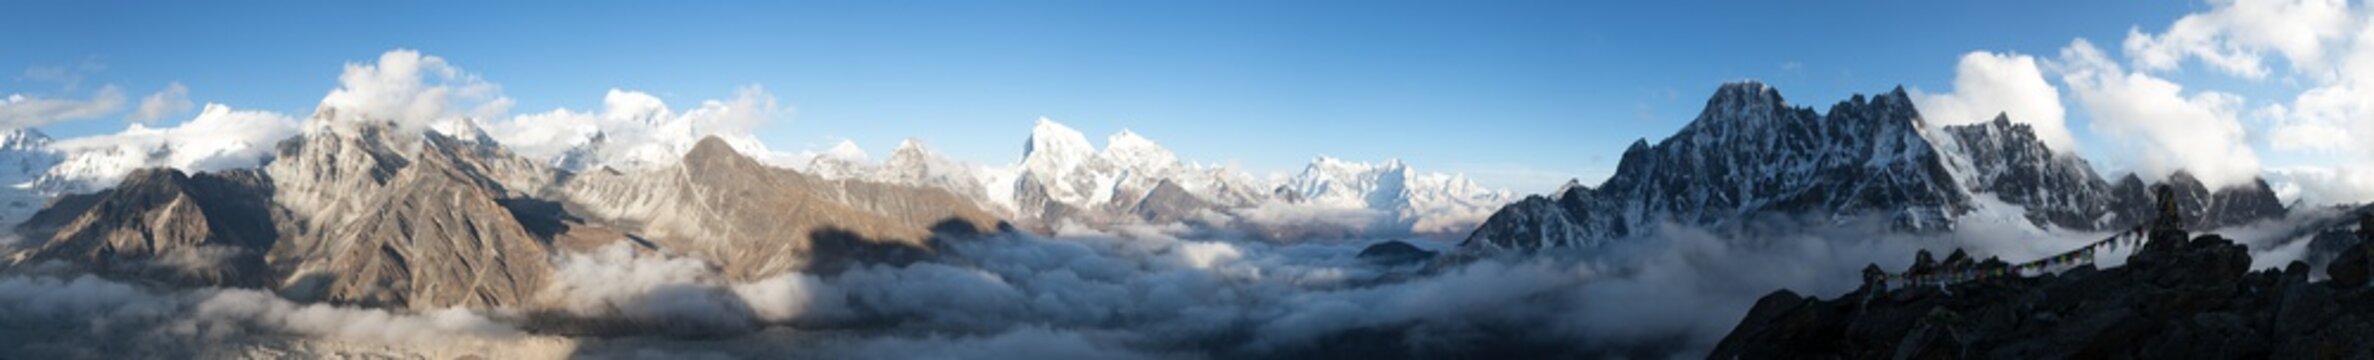 Fototapeta panorama of Mount Everest, Lhotse, Makalu and Cho Oyu